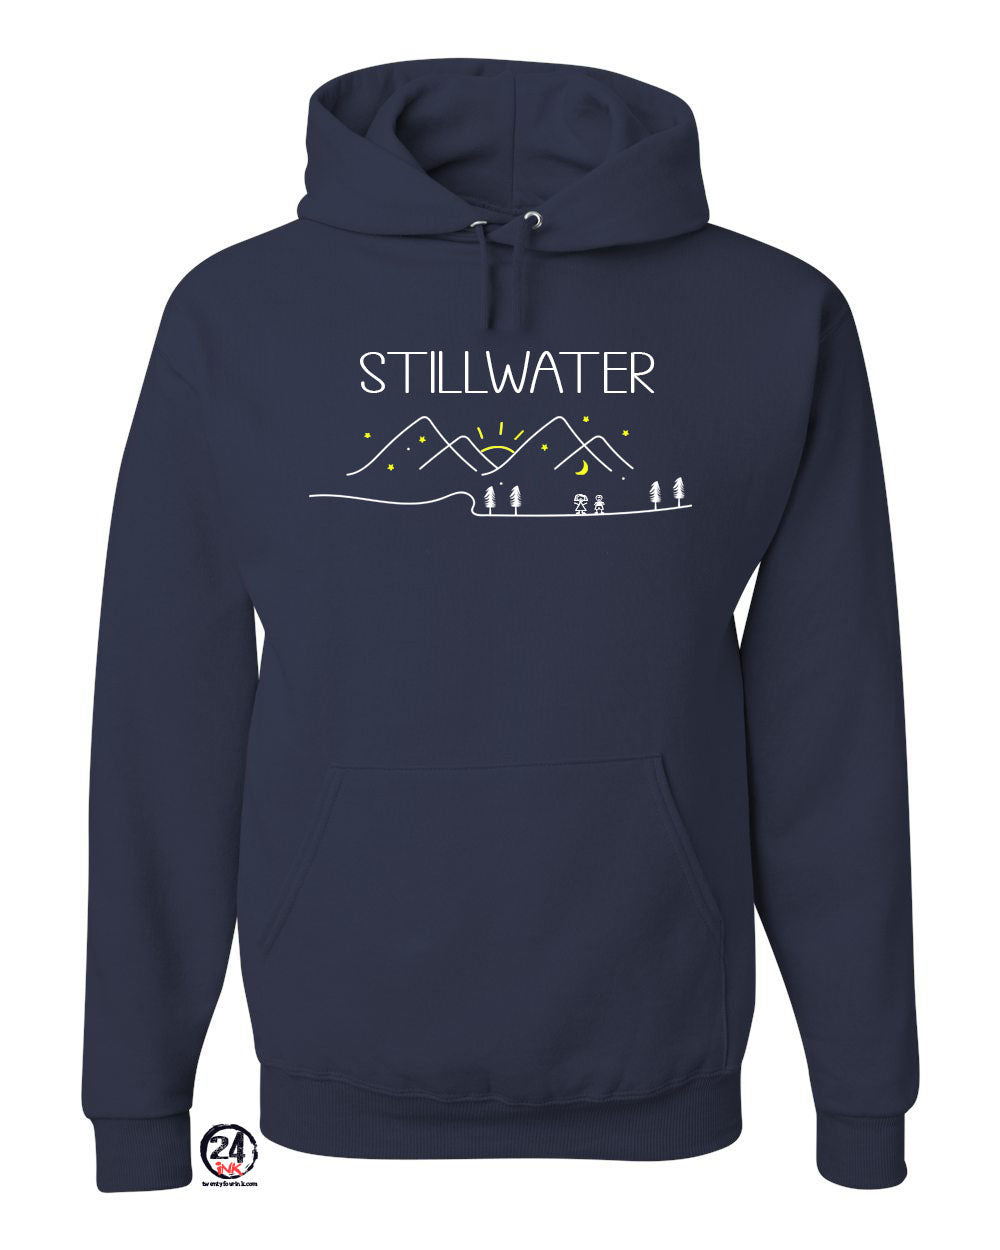 Stillwater Township Hooded Sweatshirt